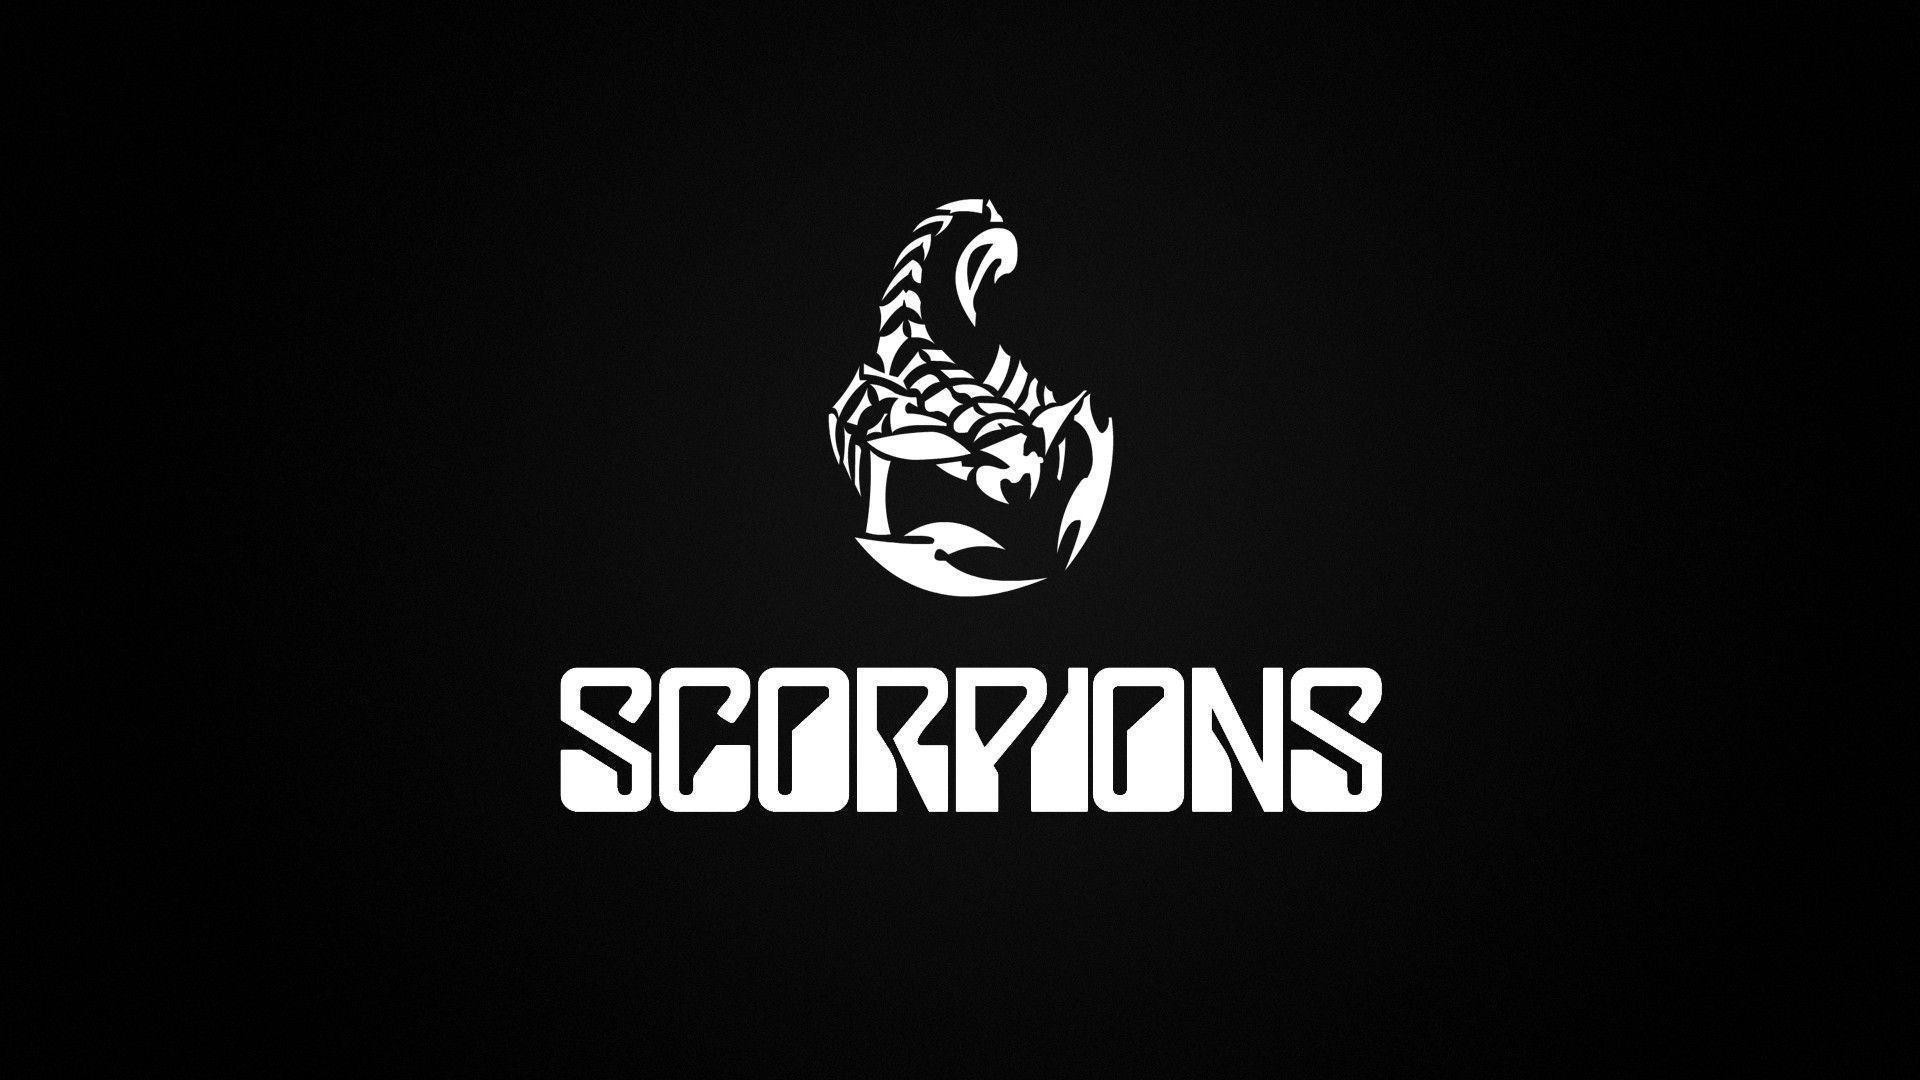 1920x1080 Scorpions | Wallpaper by RomaXP on DeviantArt